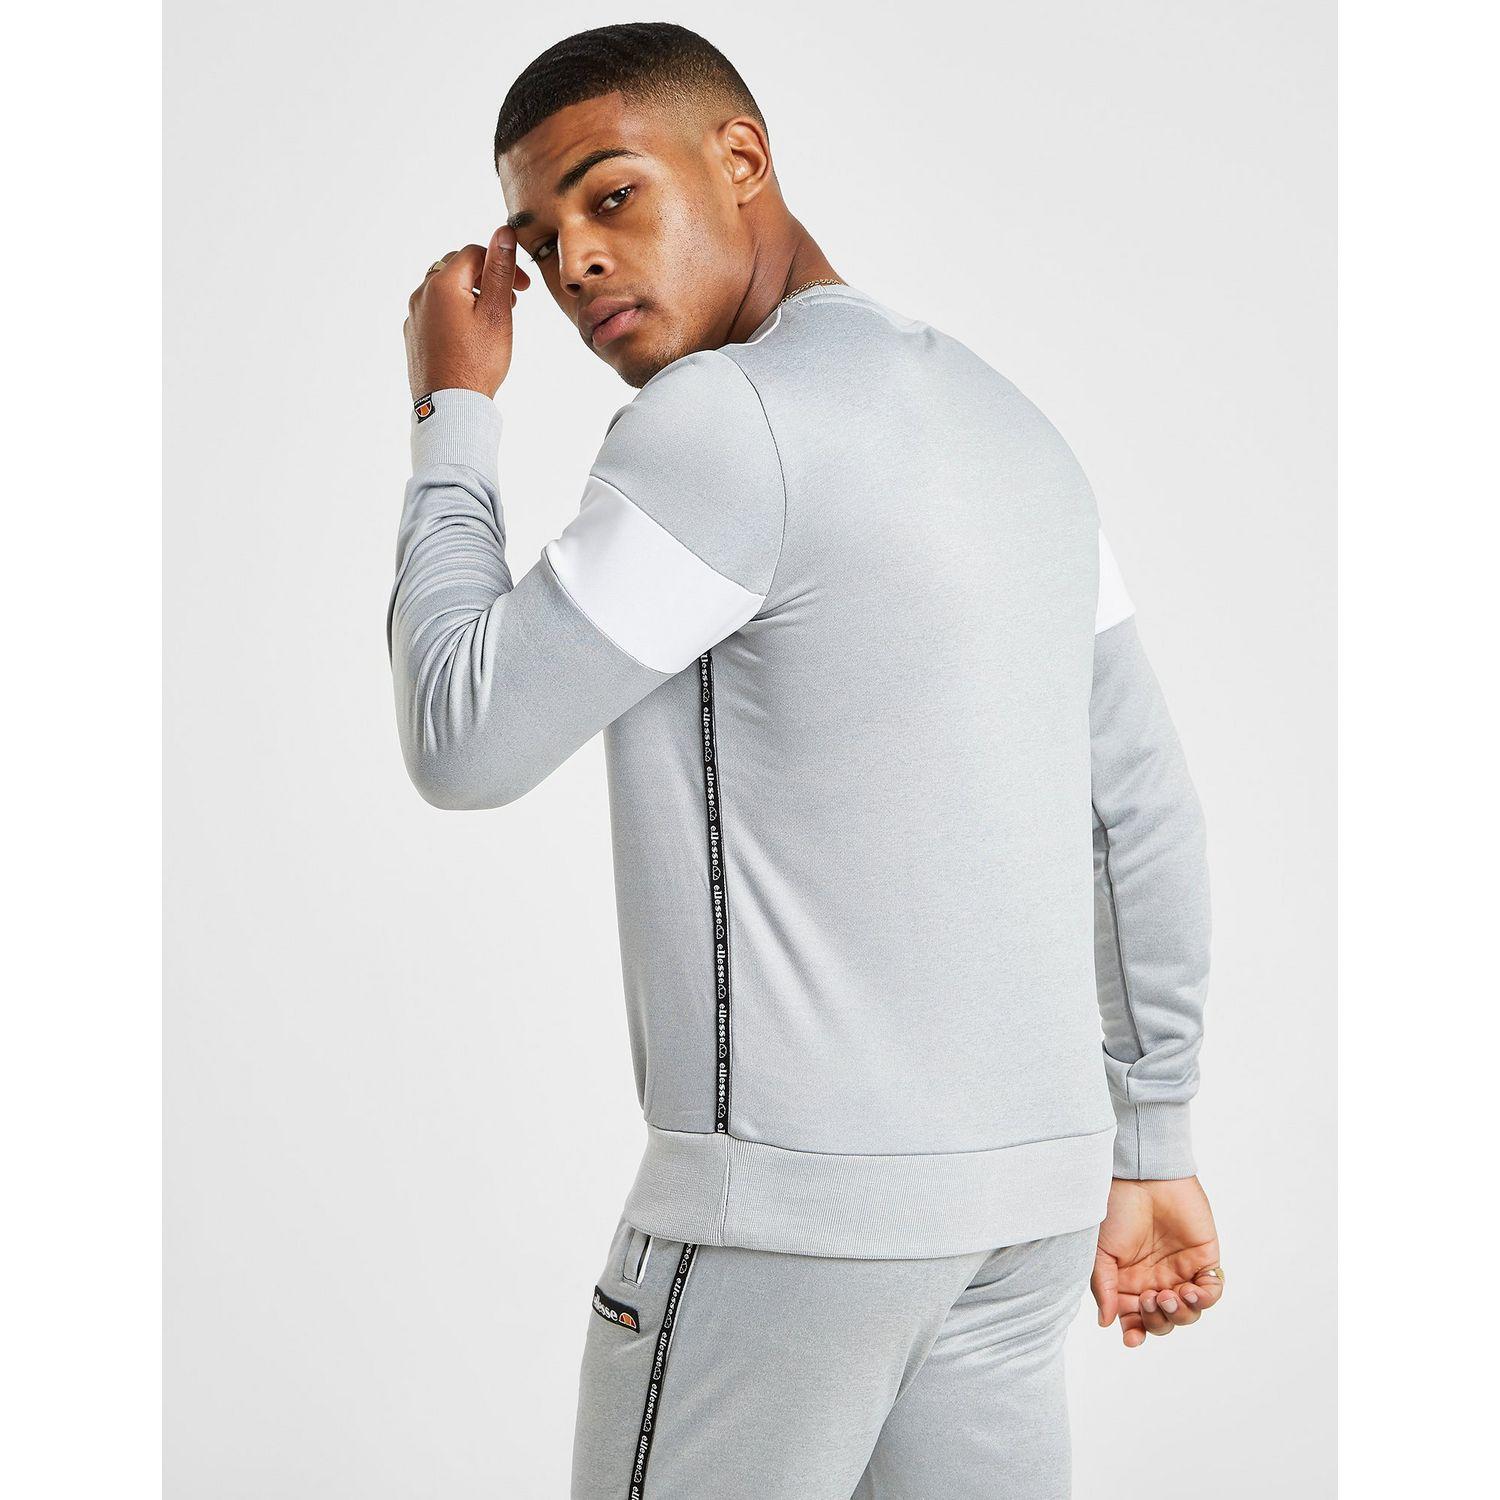 Ellesse Synthetic Bostio Poly Crew Sweatshirt in Grey/White (Grey) for Men  - Lyst